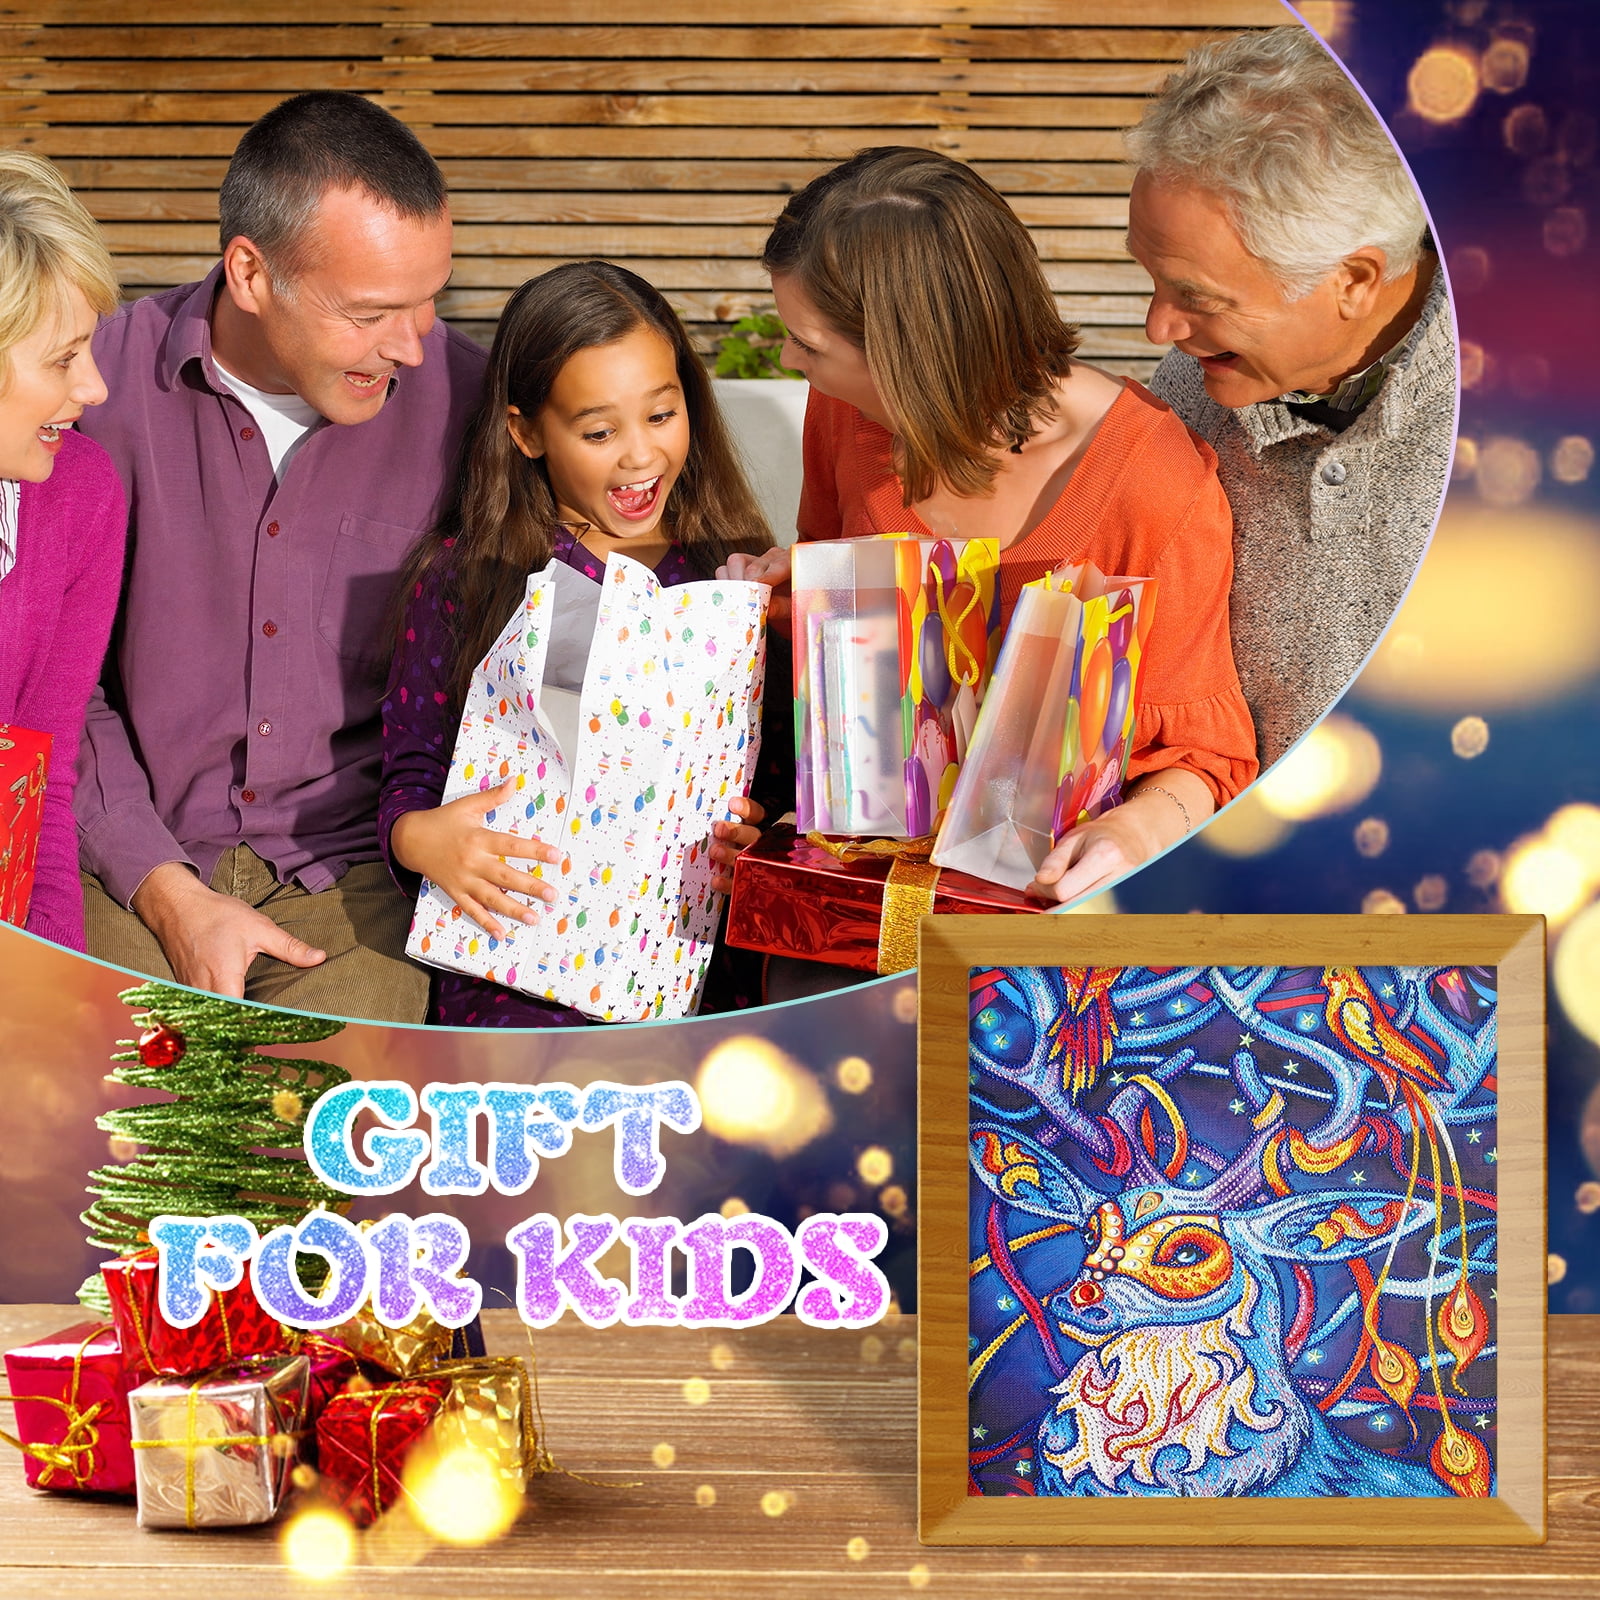 Dream Fun 5D Diamond Art Kits for Kids Age 9 10 11 12, 40 * 40 cm